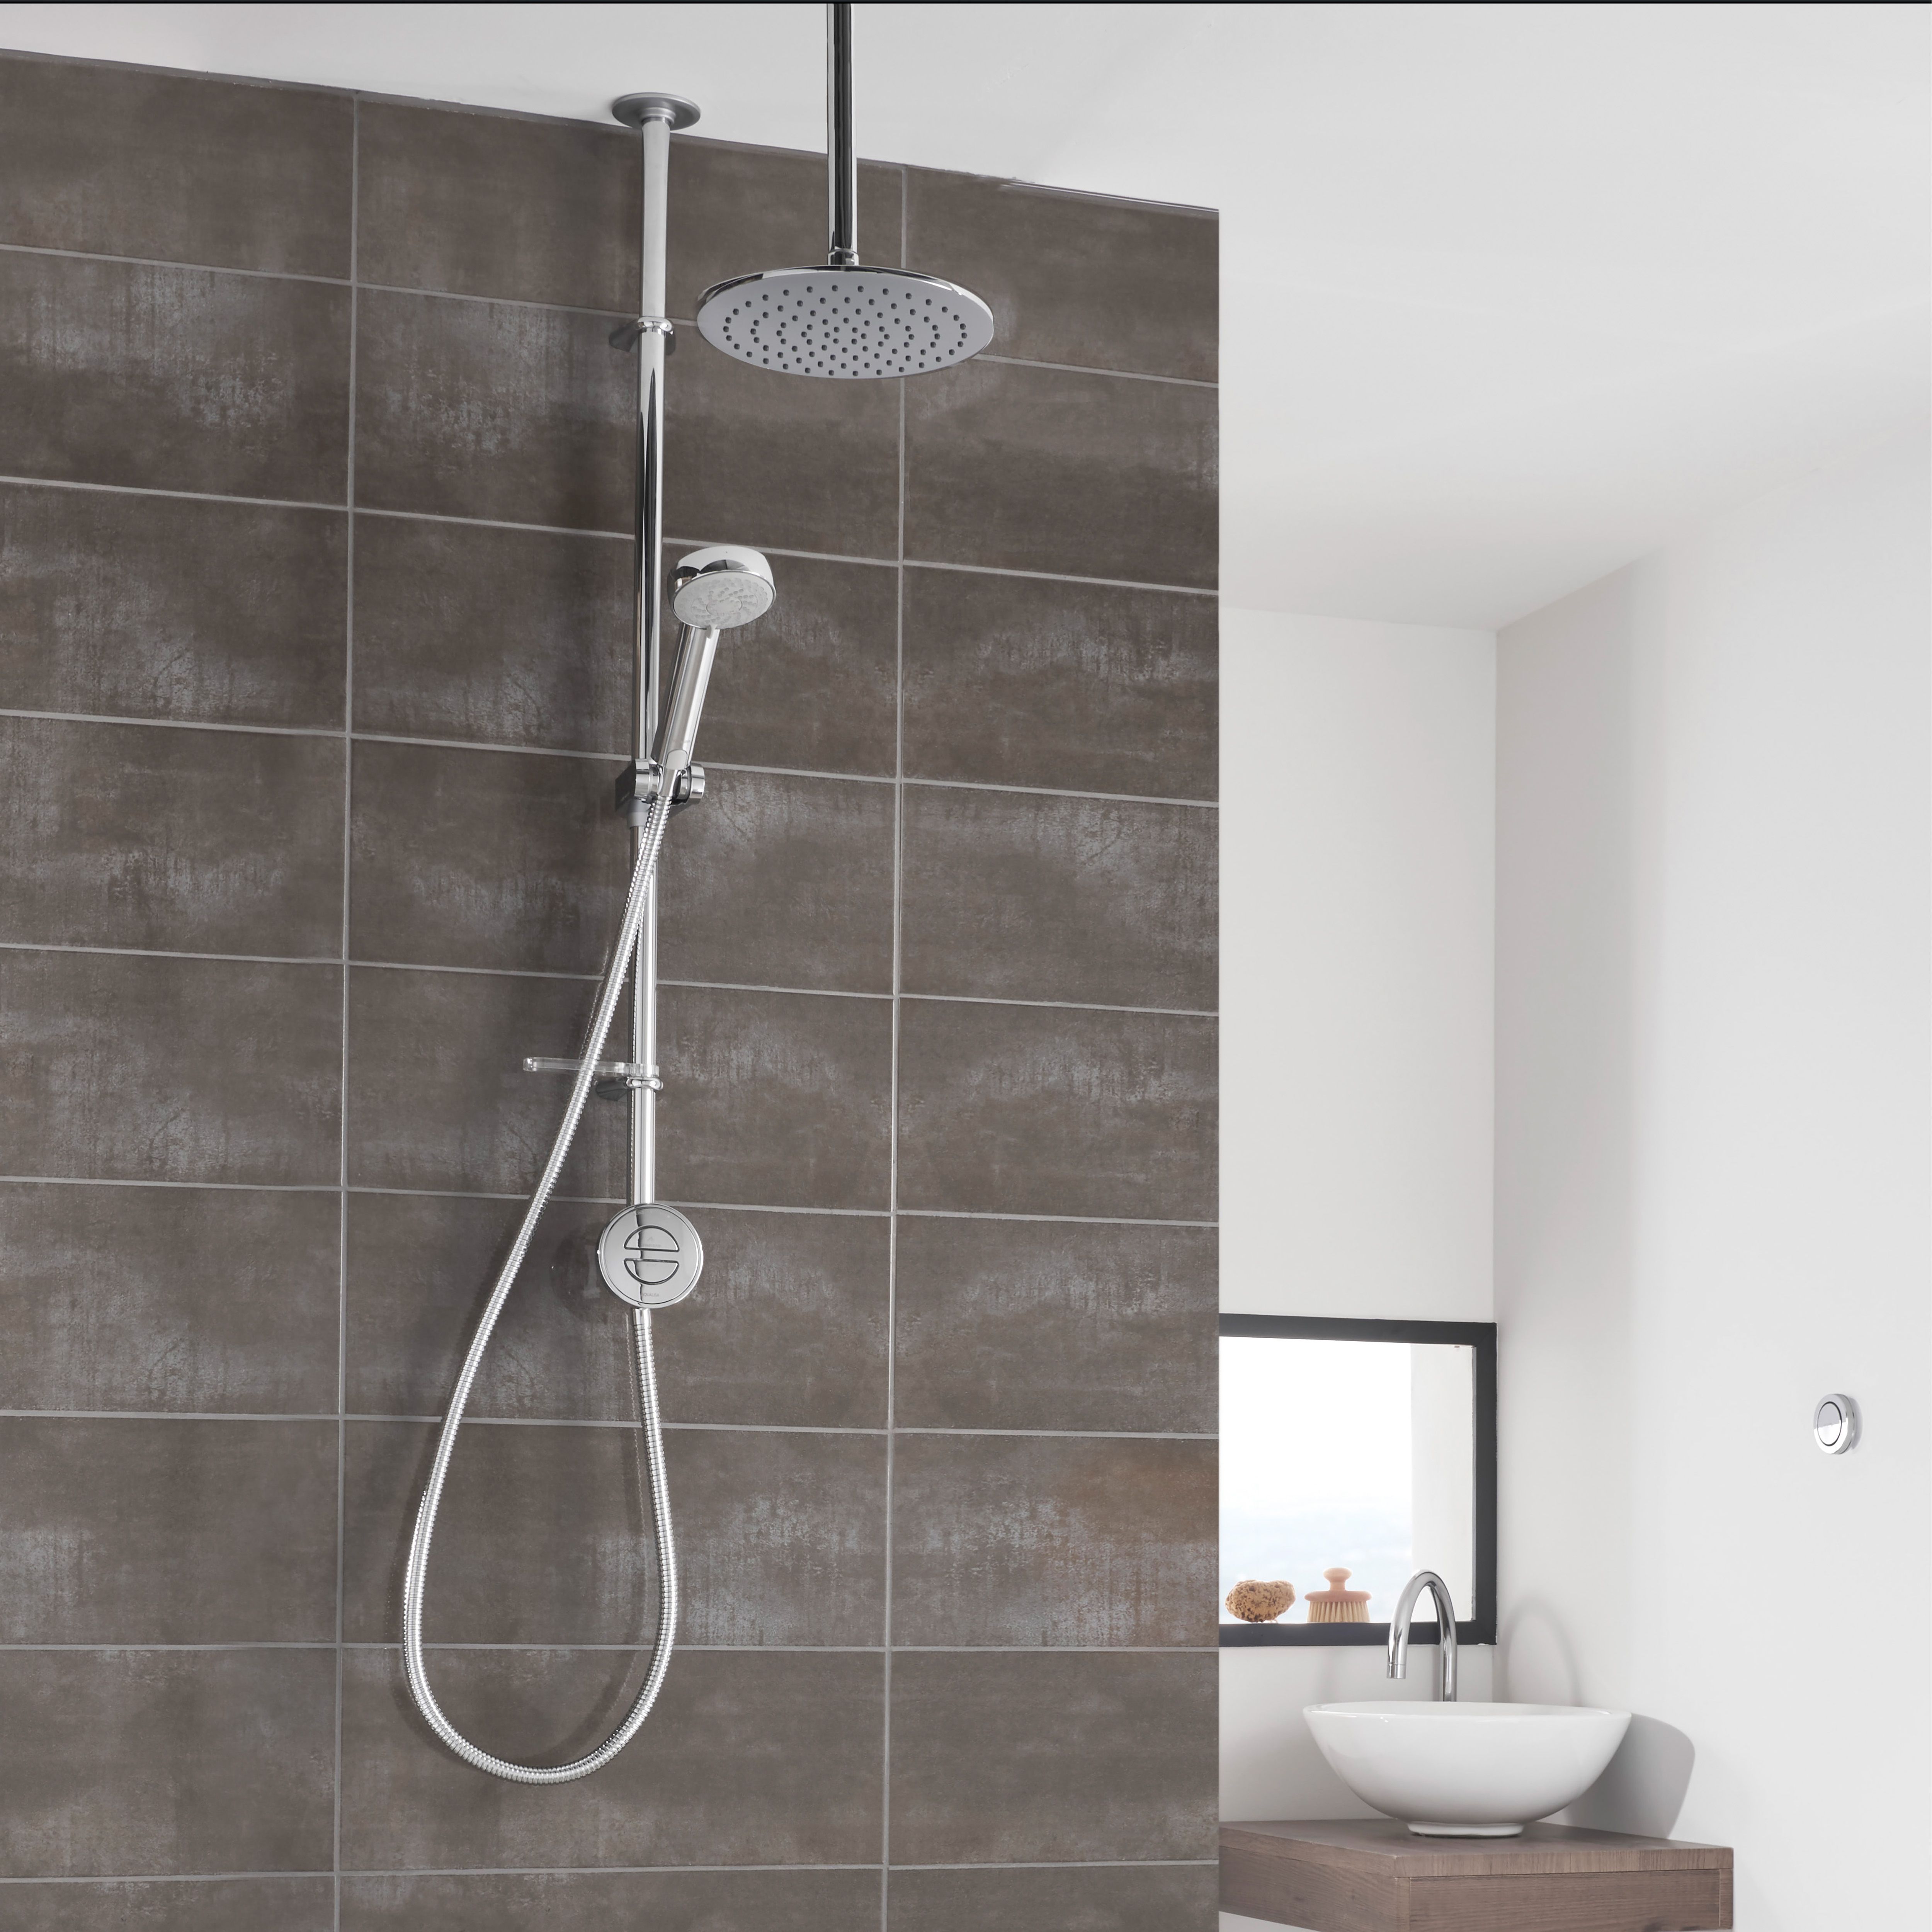 Aqualisa Smart Link Exposed valve Gravity-pumped Ceiling fed Smart Digital Shower with Adjustable